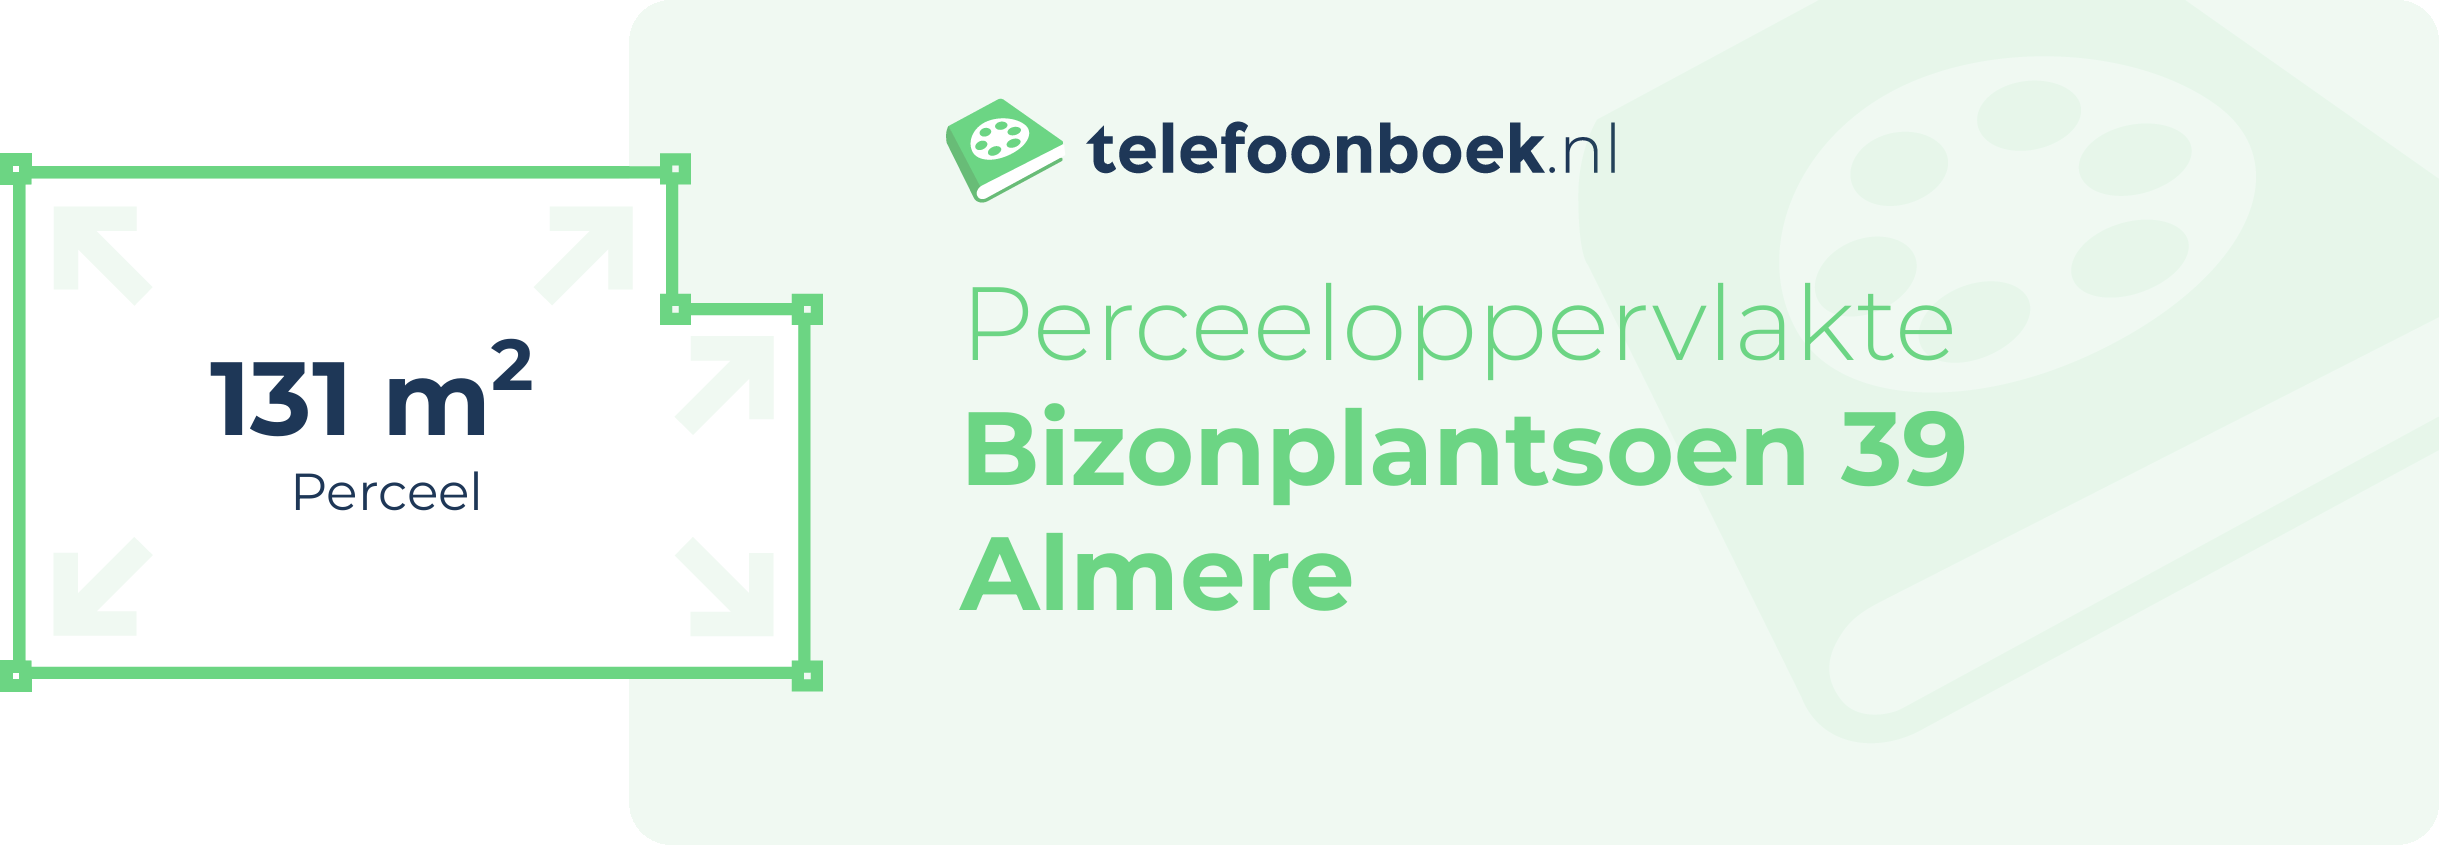 Perceeloppervlakte Bizonplantsoen 39 Almere